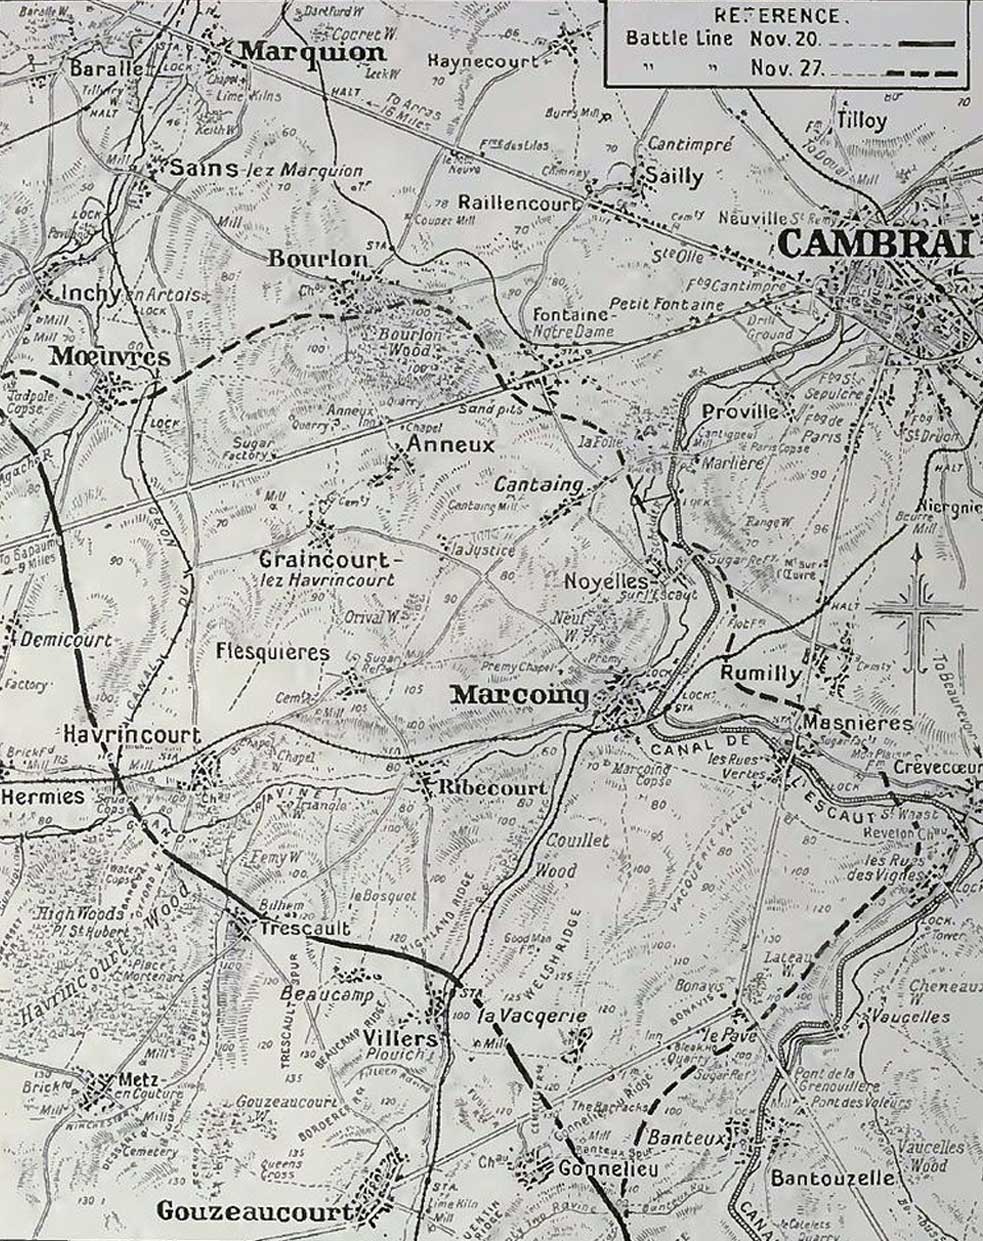 Cambrai area, 1917